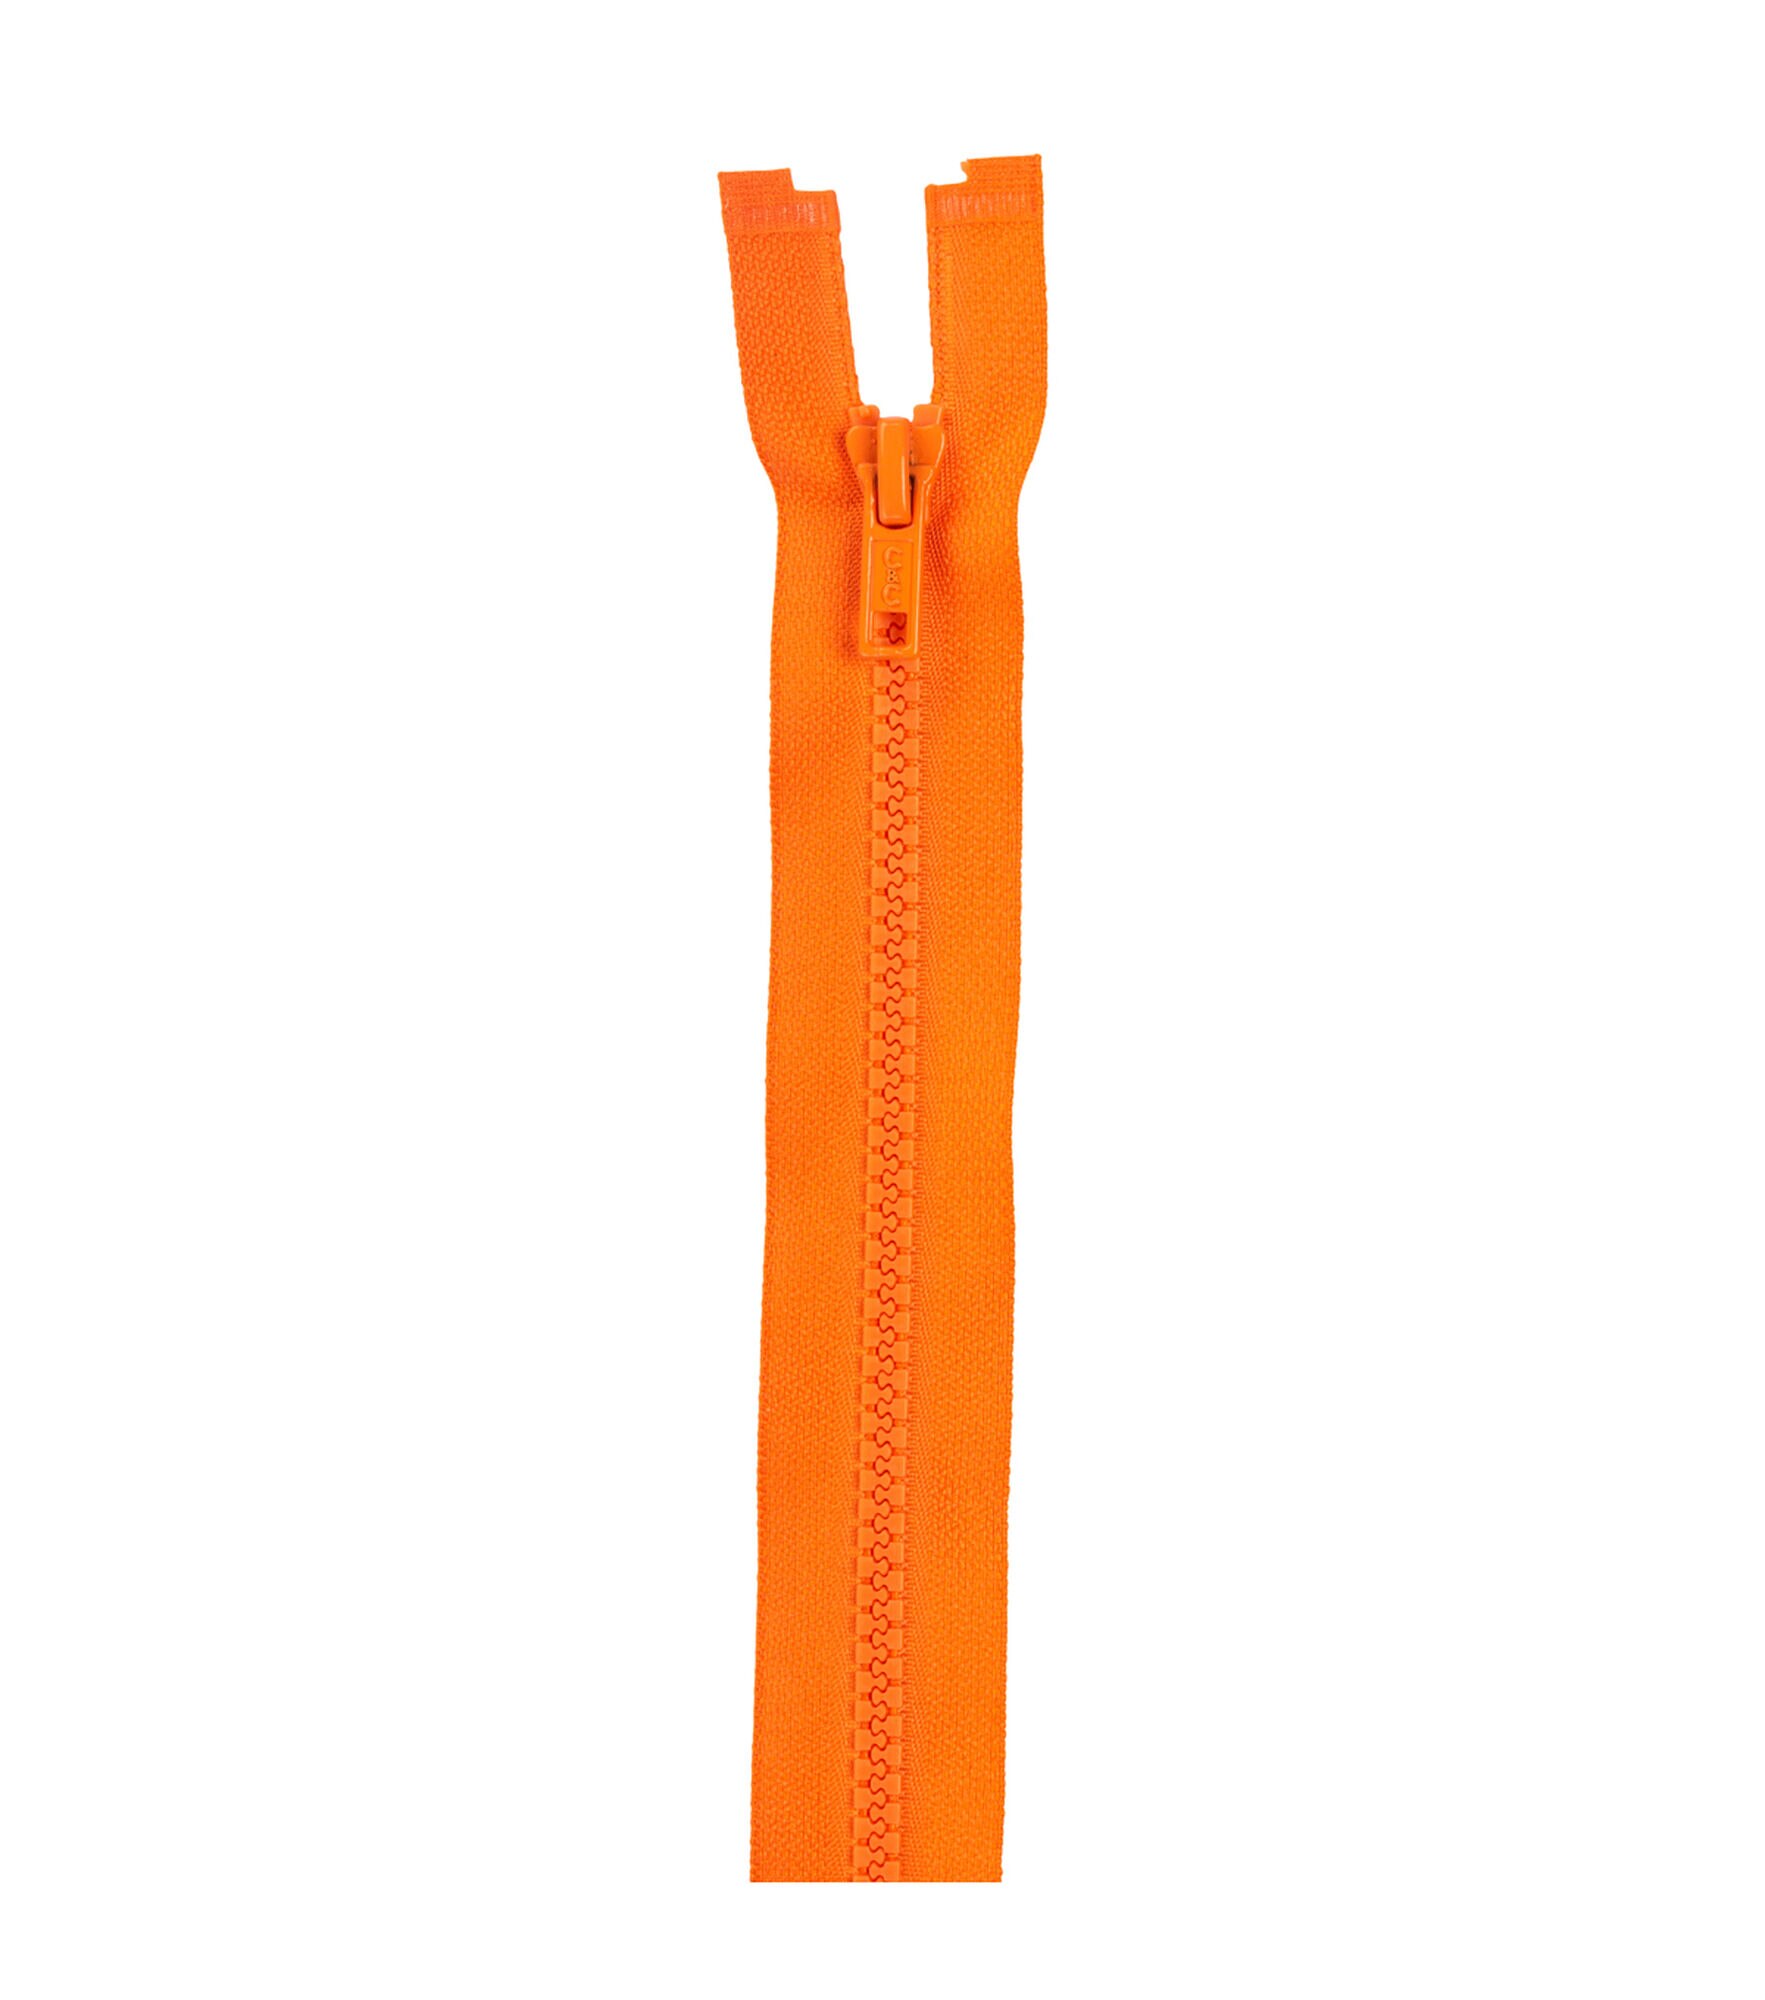 Coats & Clark Sport Separating Zipper 28", Tangerine, hi-res